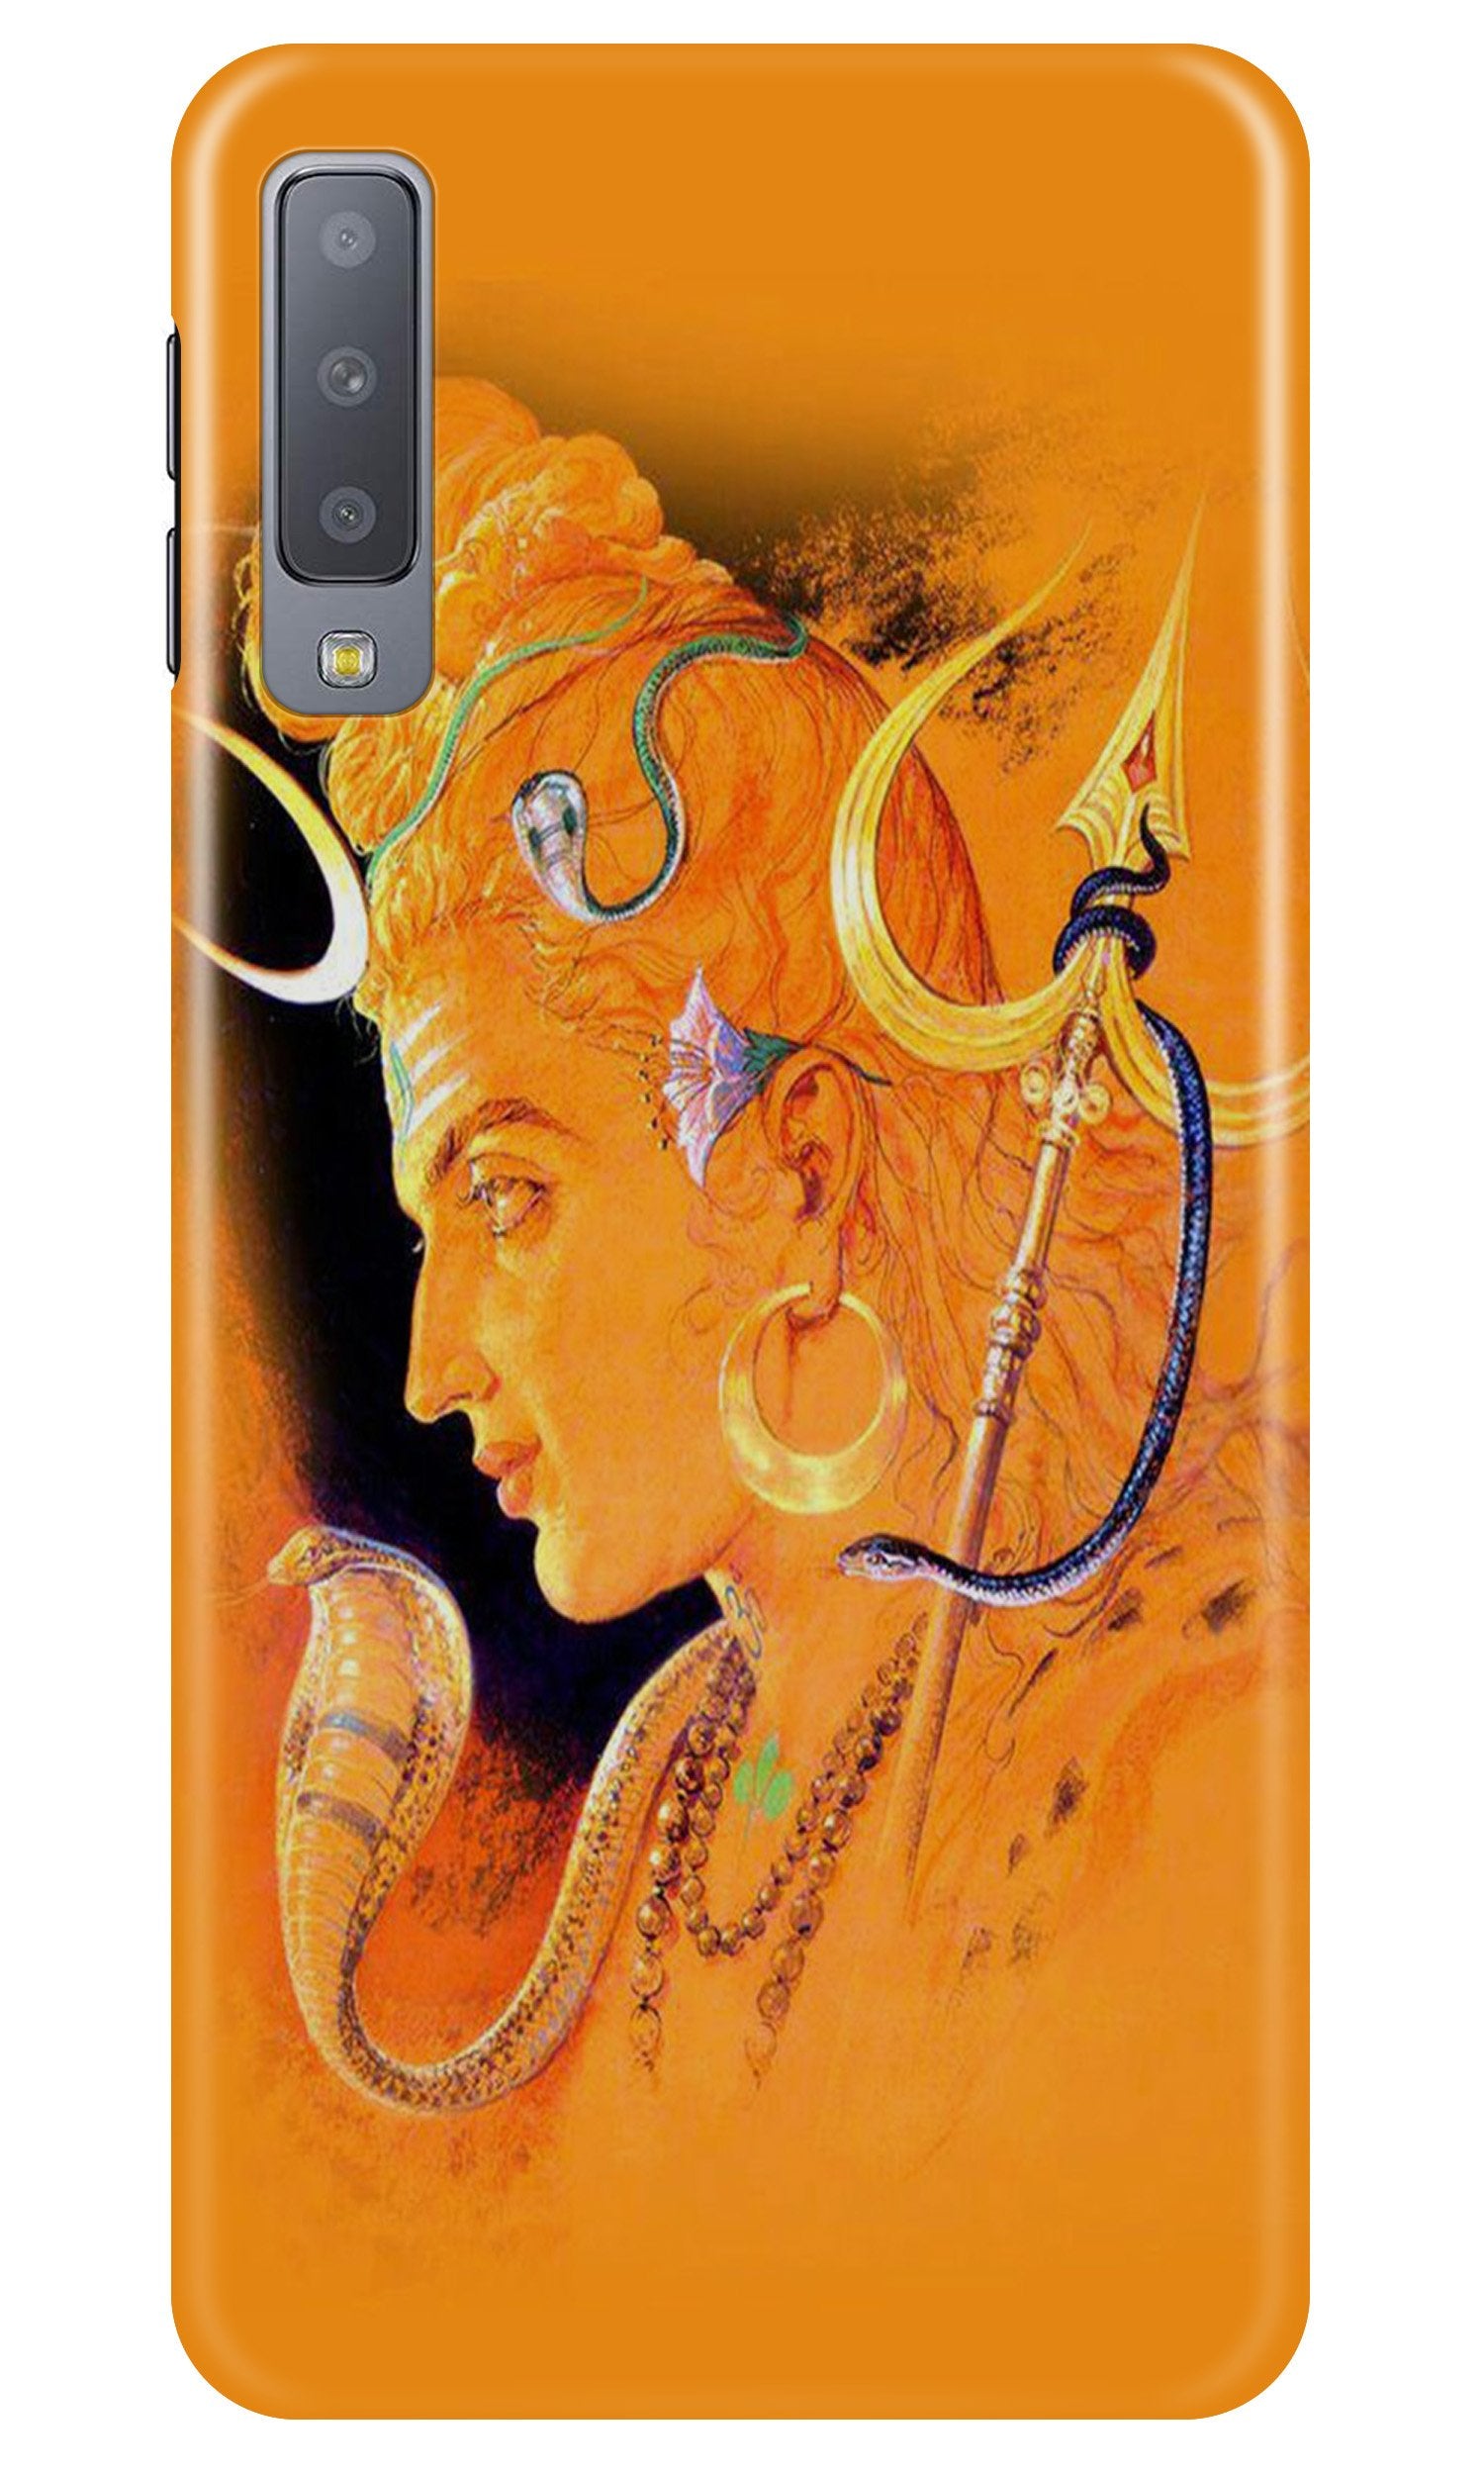 Lord Shiva Case for Samsung Galaxy A70 (Design No. 293)